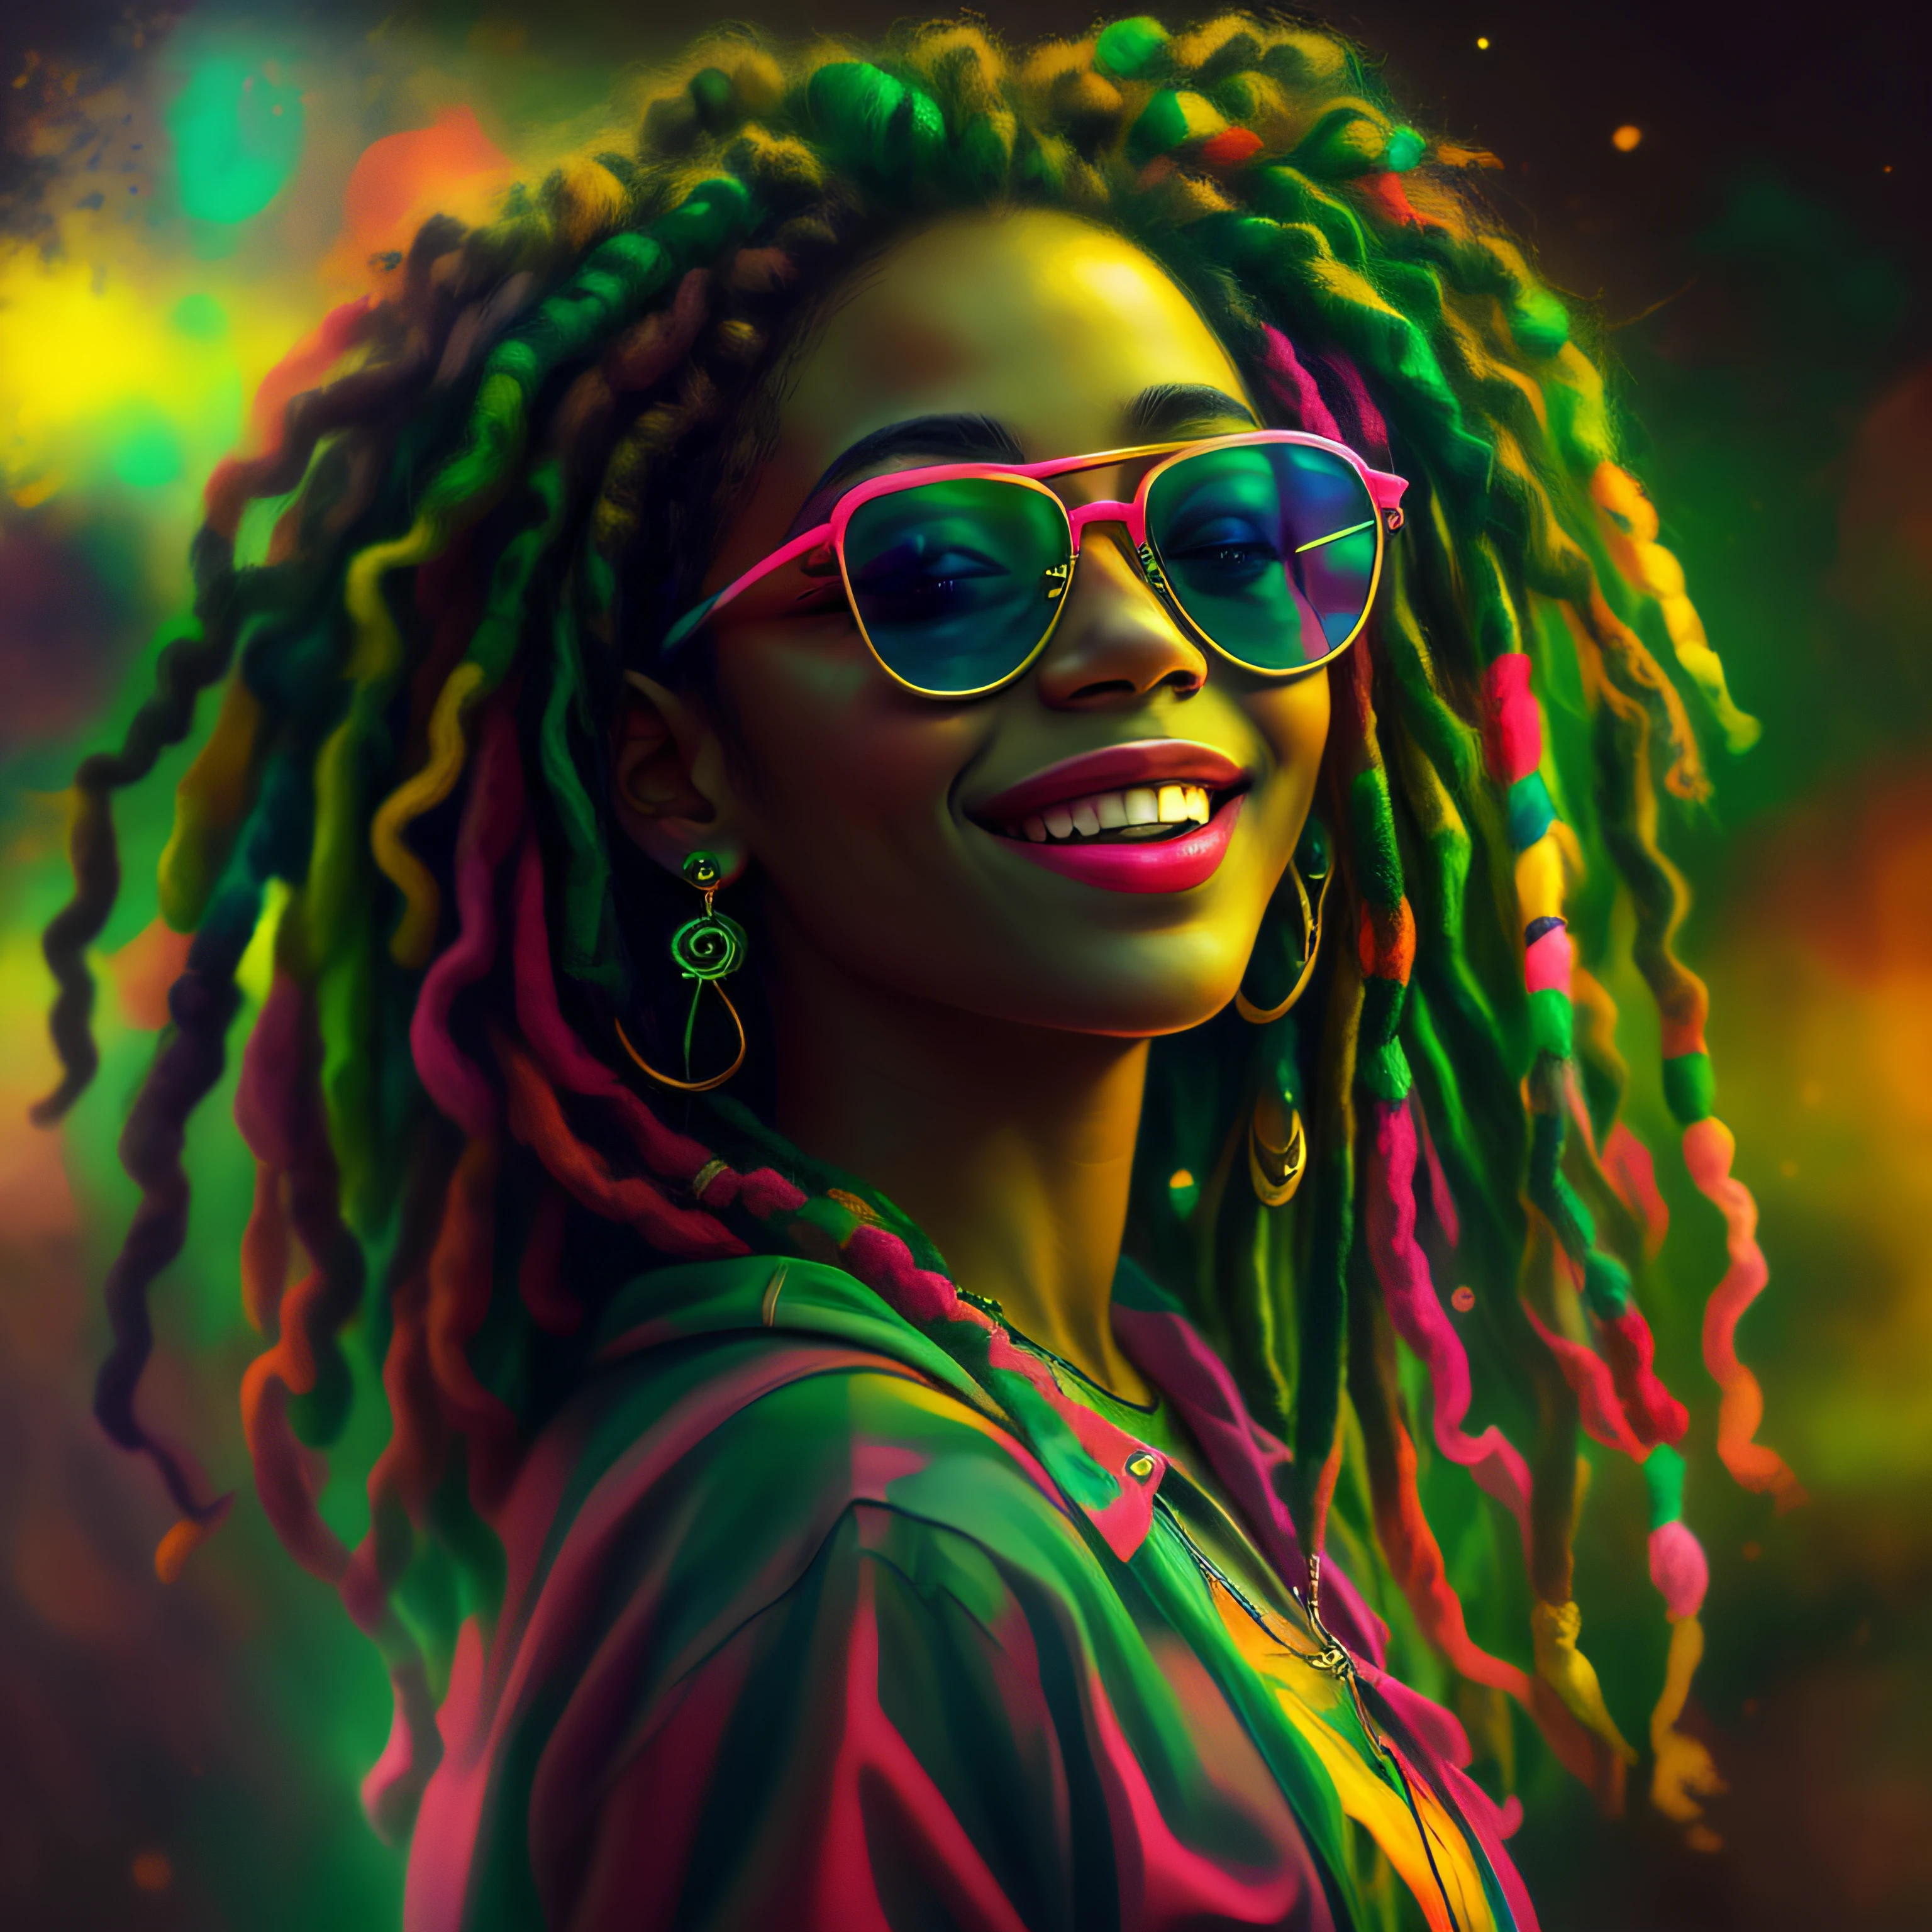 arte vectorial, arte borroso (1 chica rasta sonriendo con ropa de color reggae) mafia, iluminación cinematográfica estilo neón, salpicado de tinta